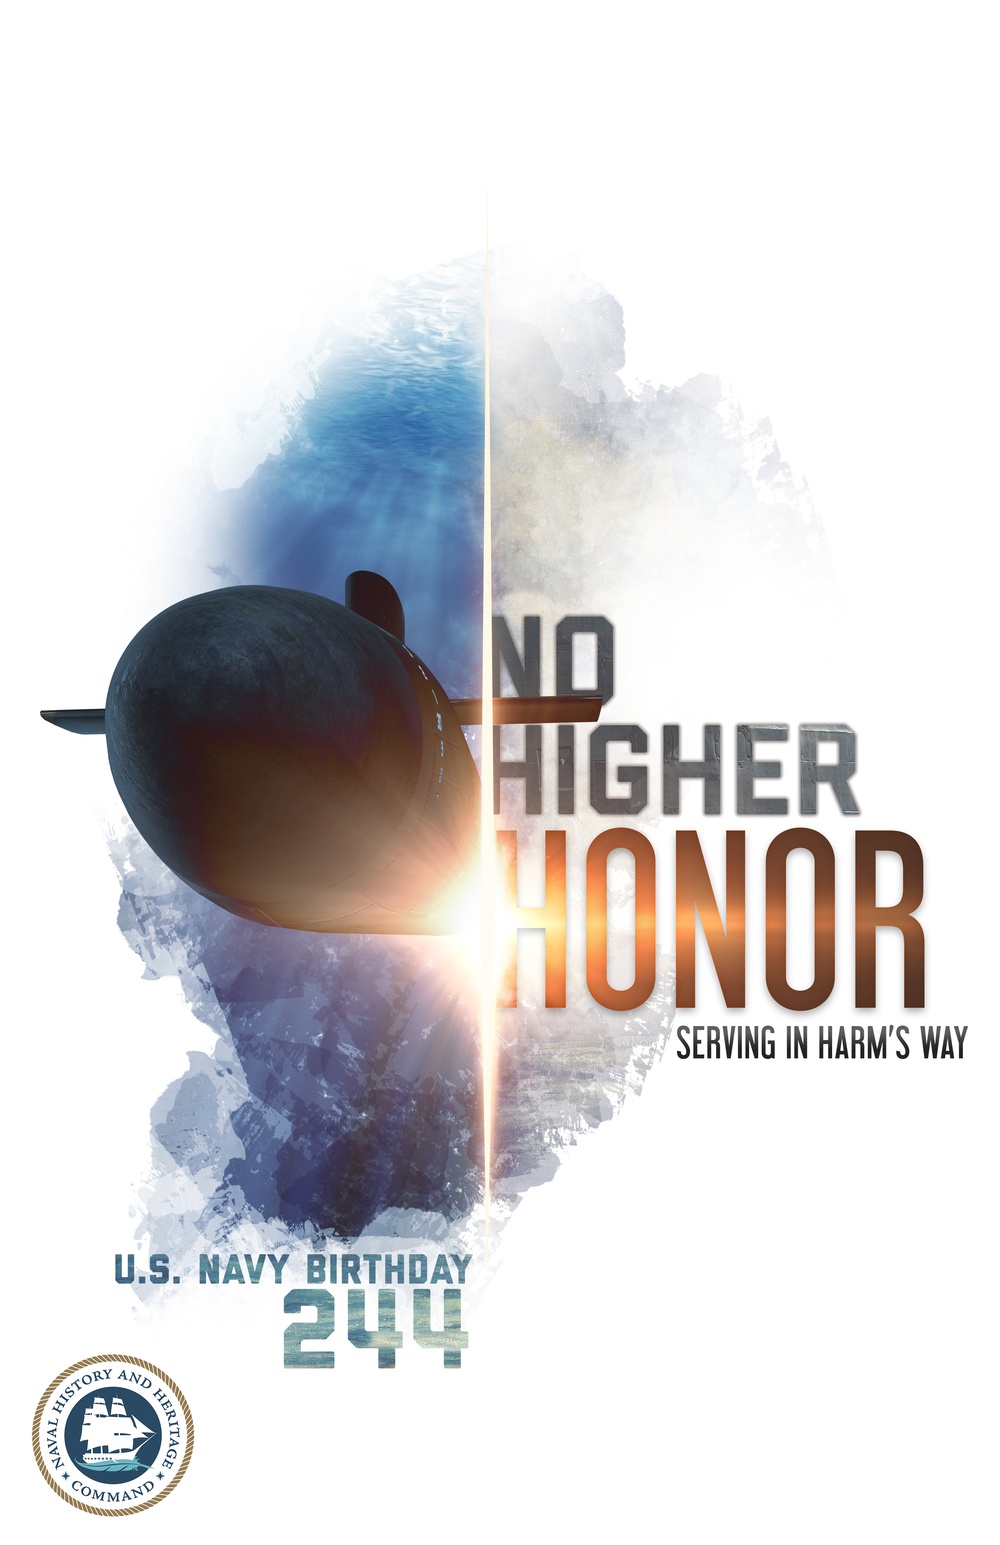 Navy Birthday 244 No Higher Honor - Submarines - Poster